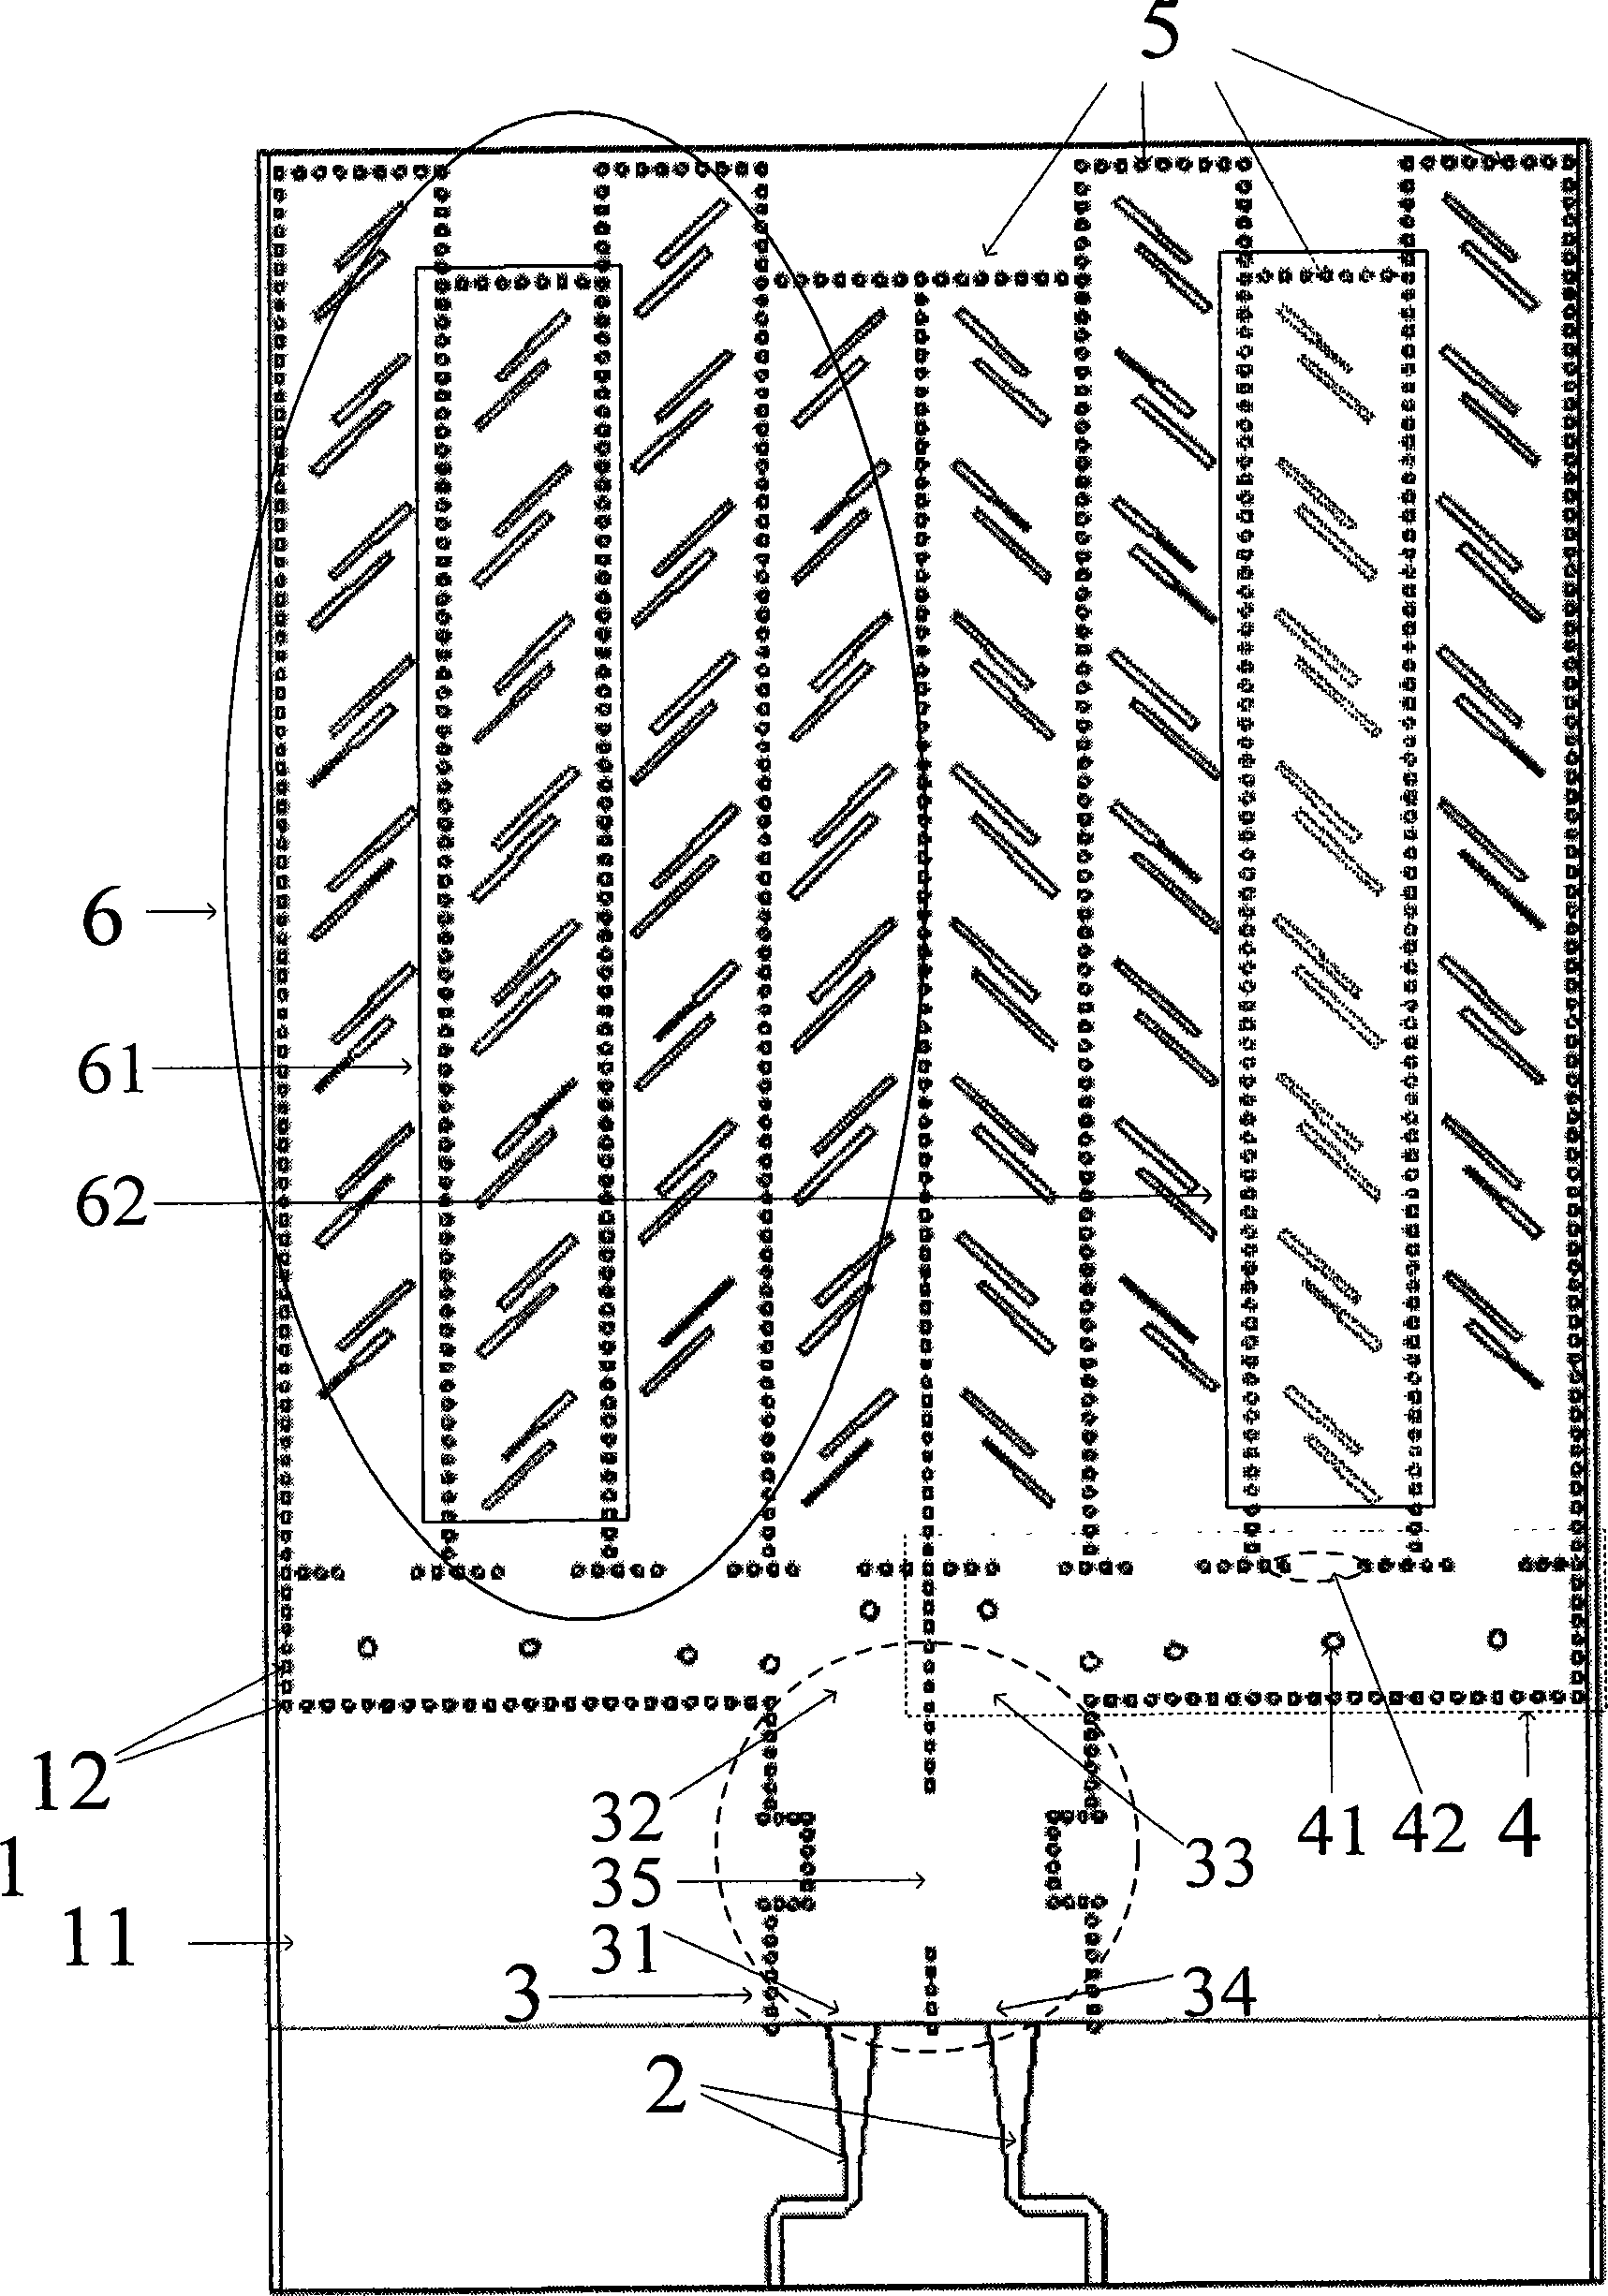 Base-plate integration waveguide harmonic oscillation type gap array circular-polarization antenna